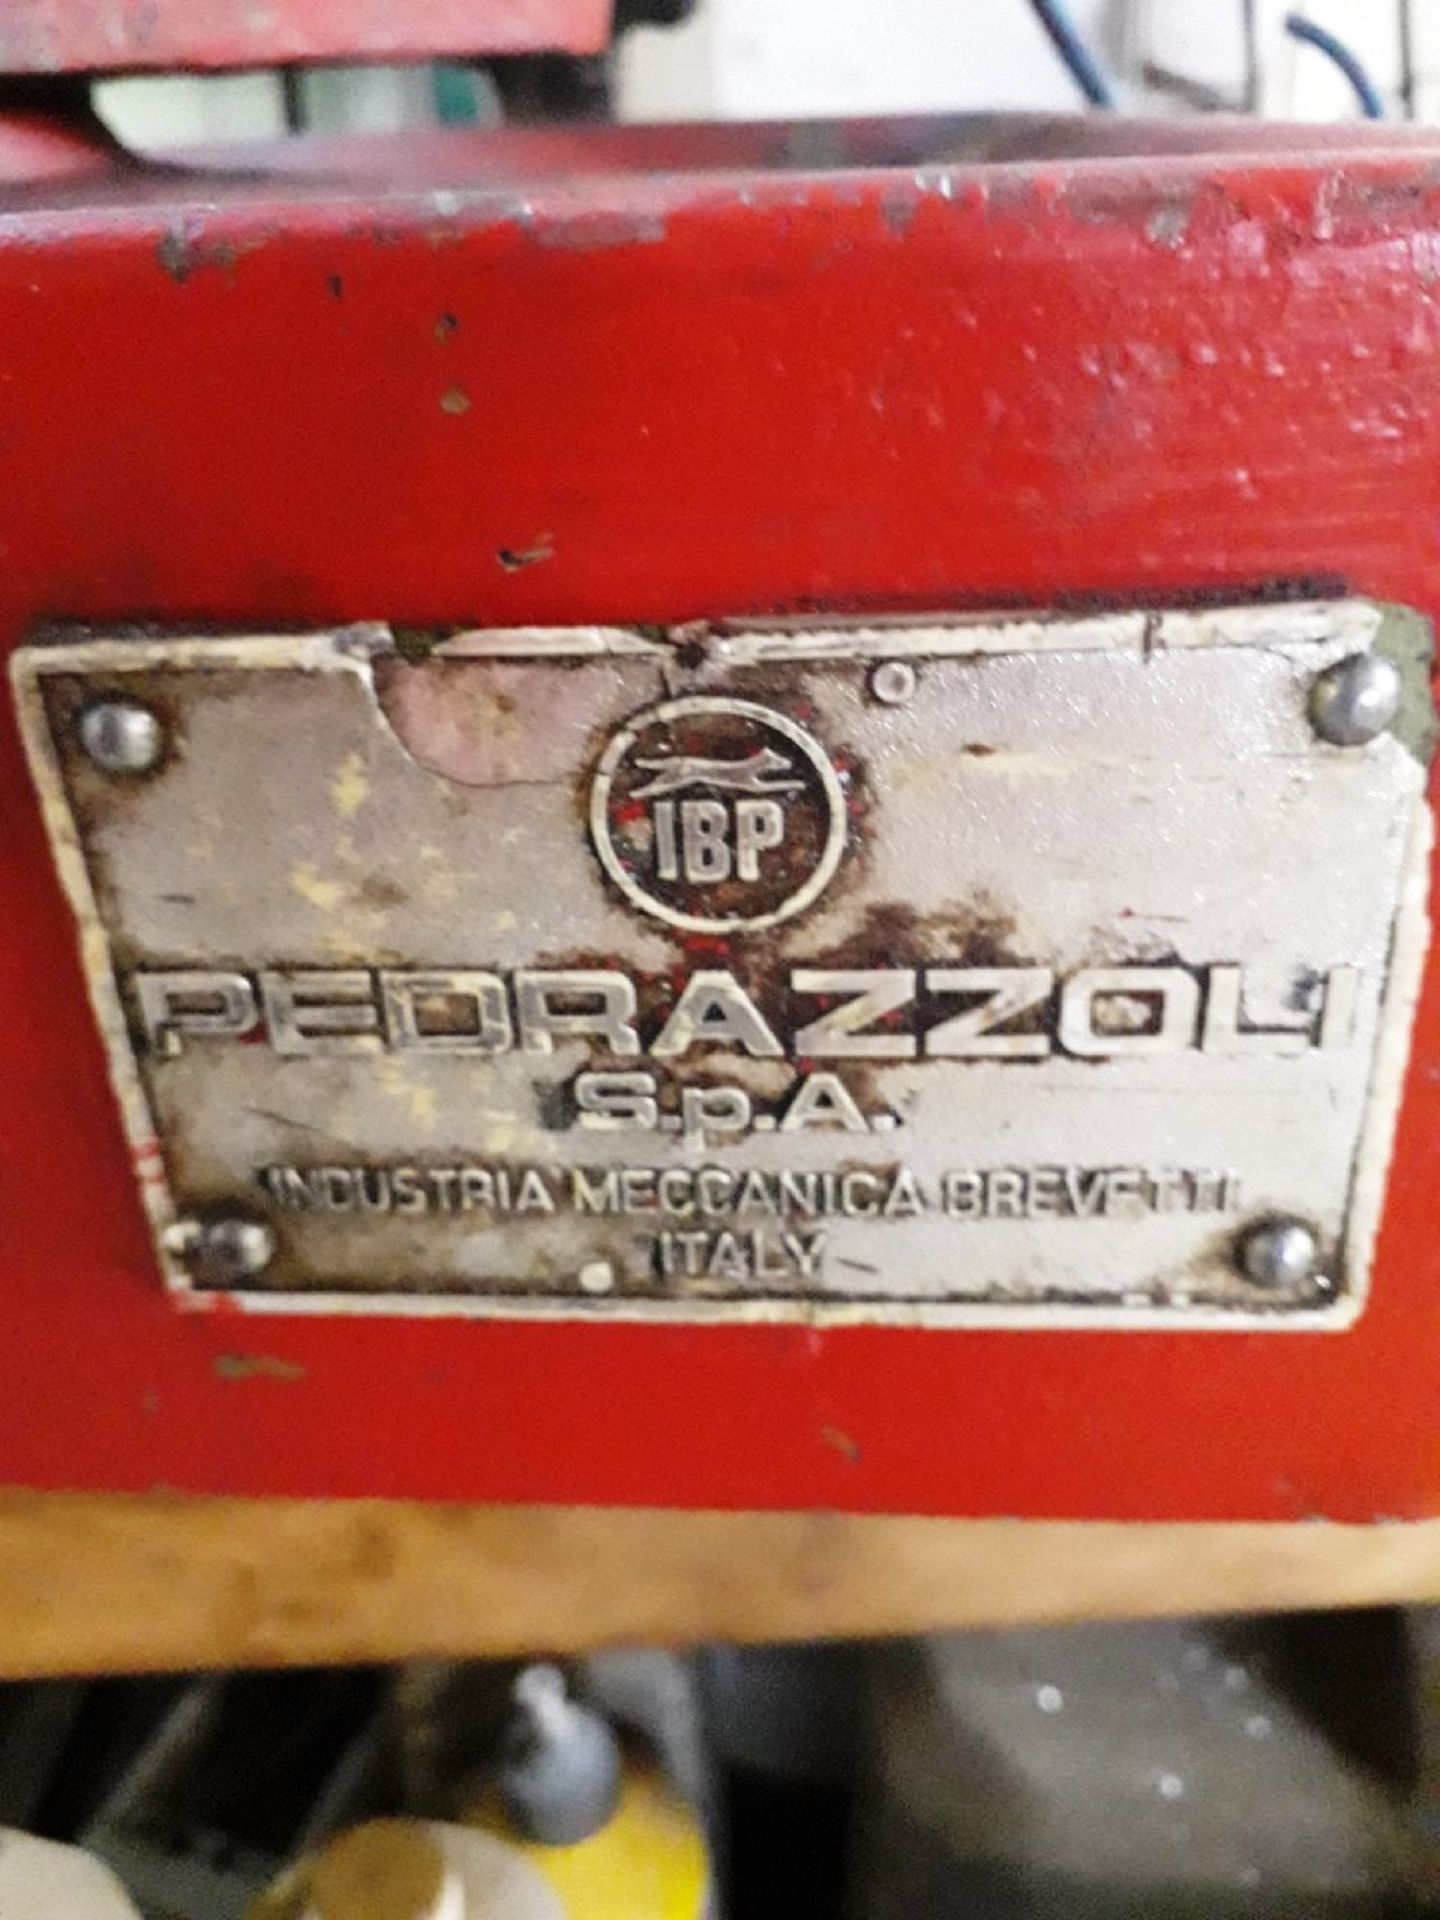 Pedrazzoli brown 250 Circular Saw AM580 240v serial number 838488 - Image 3 of 3